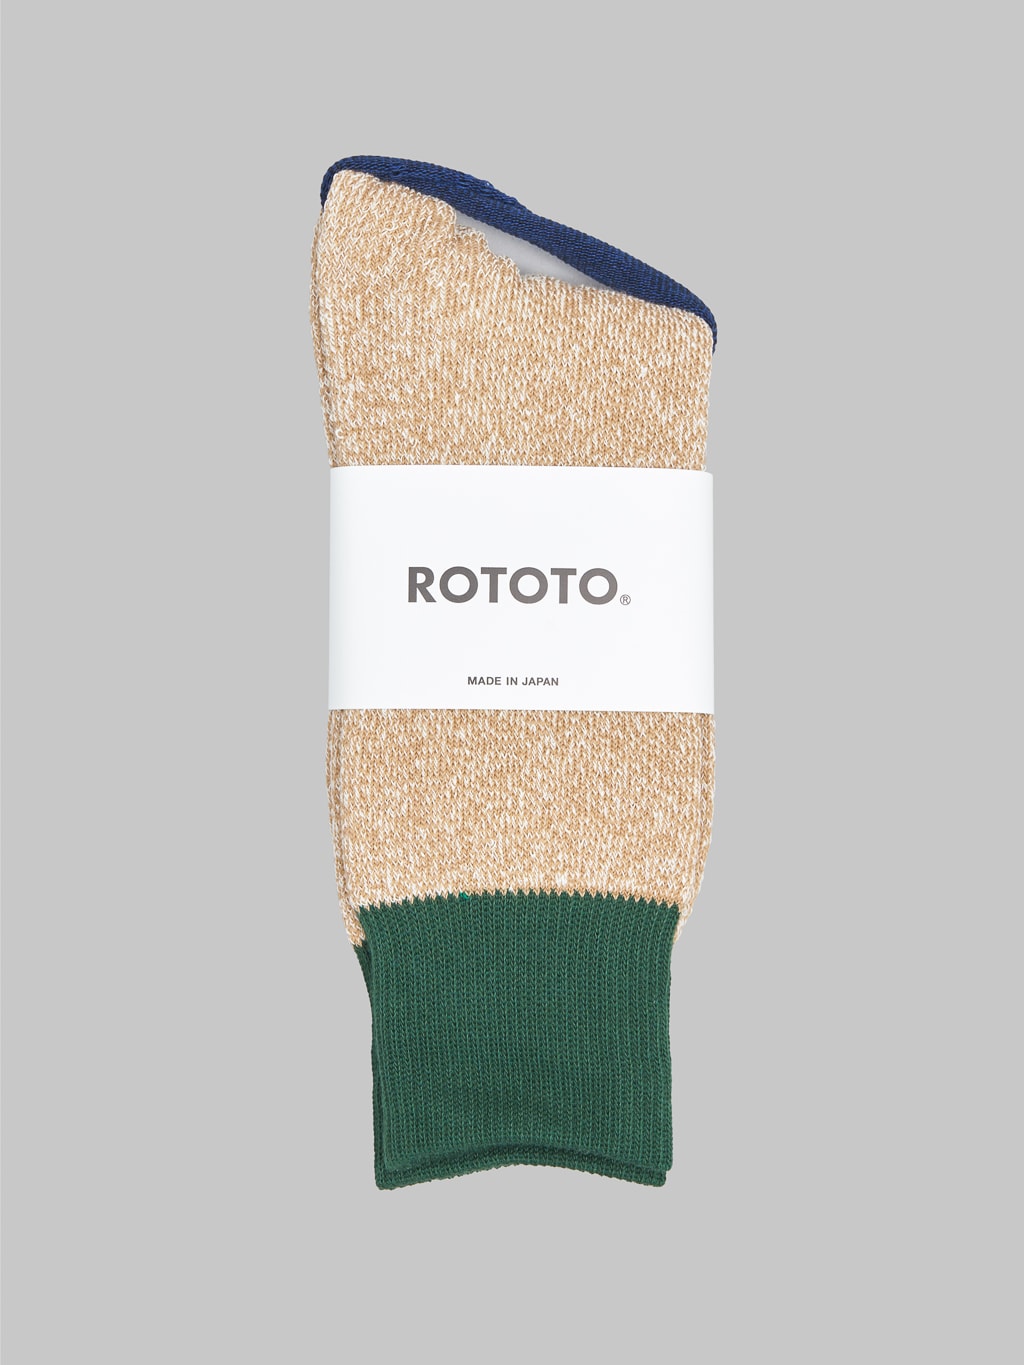 ROTOTO Double Face Crew Socks "Silk & Cotton" Dark Green/Beige